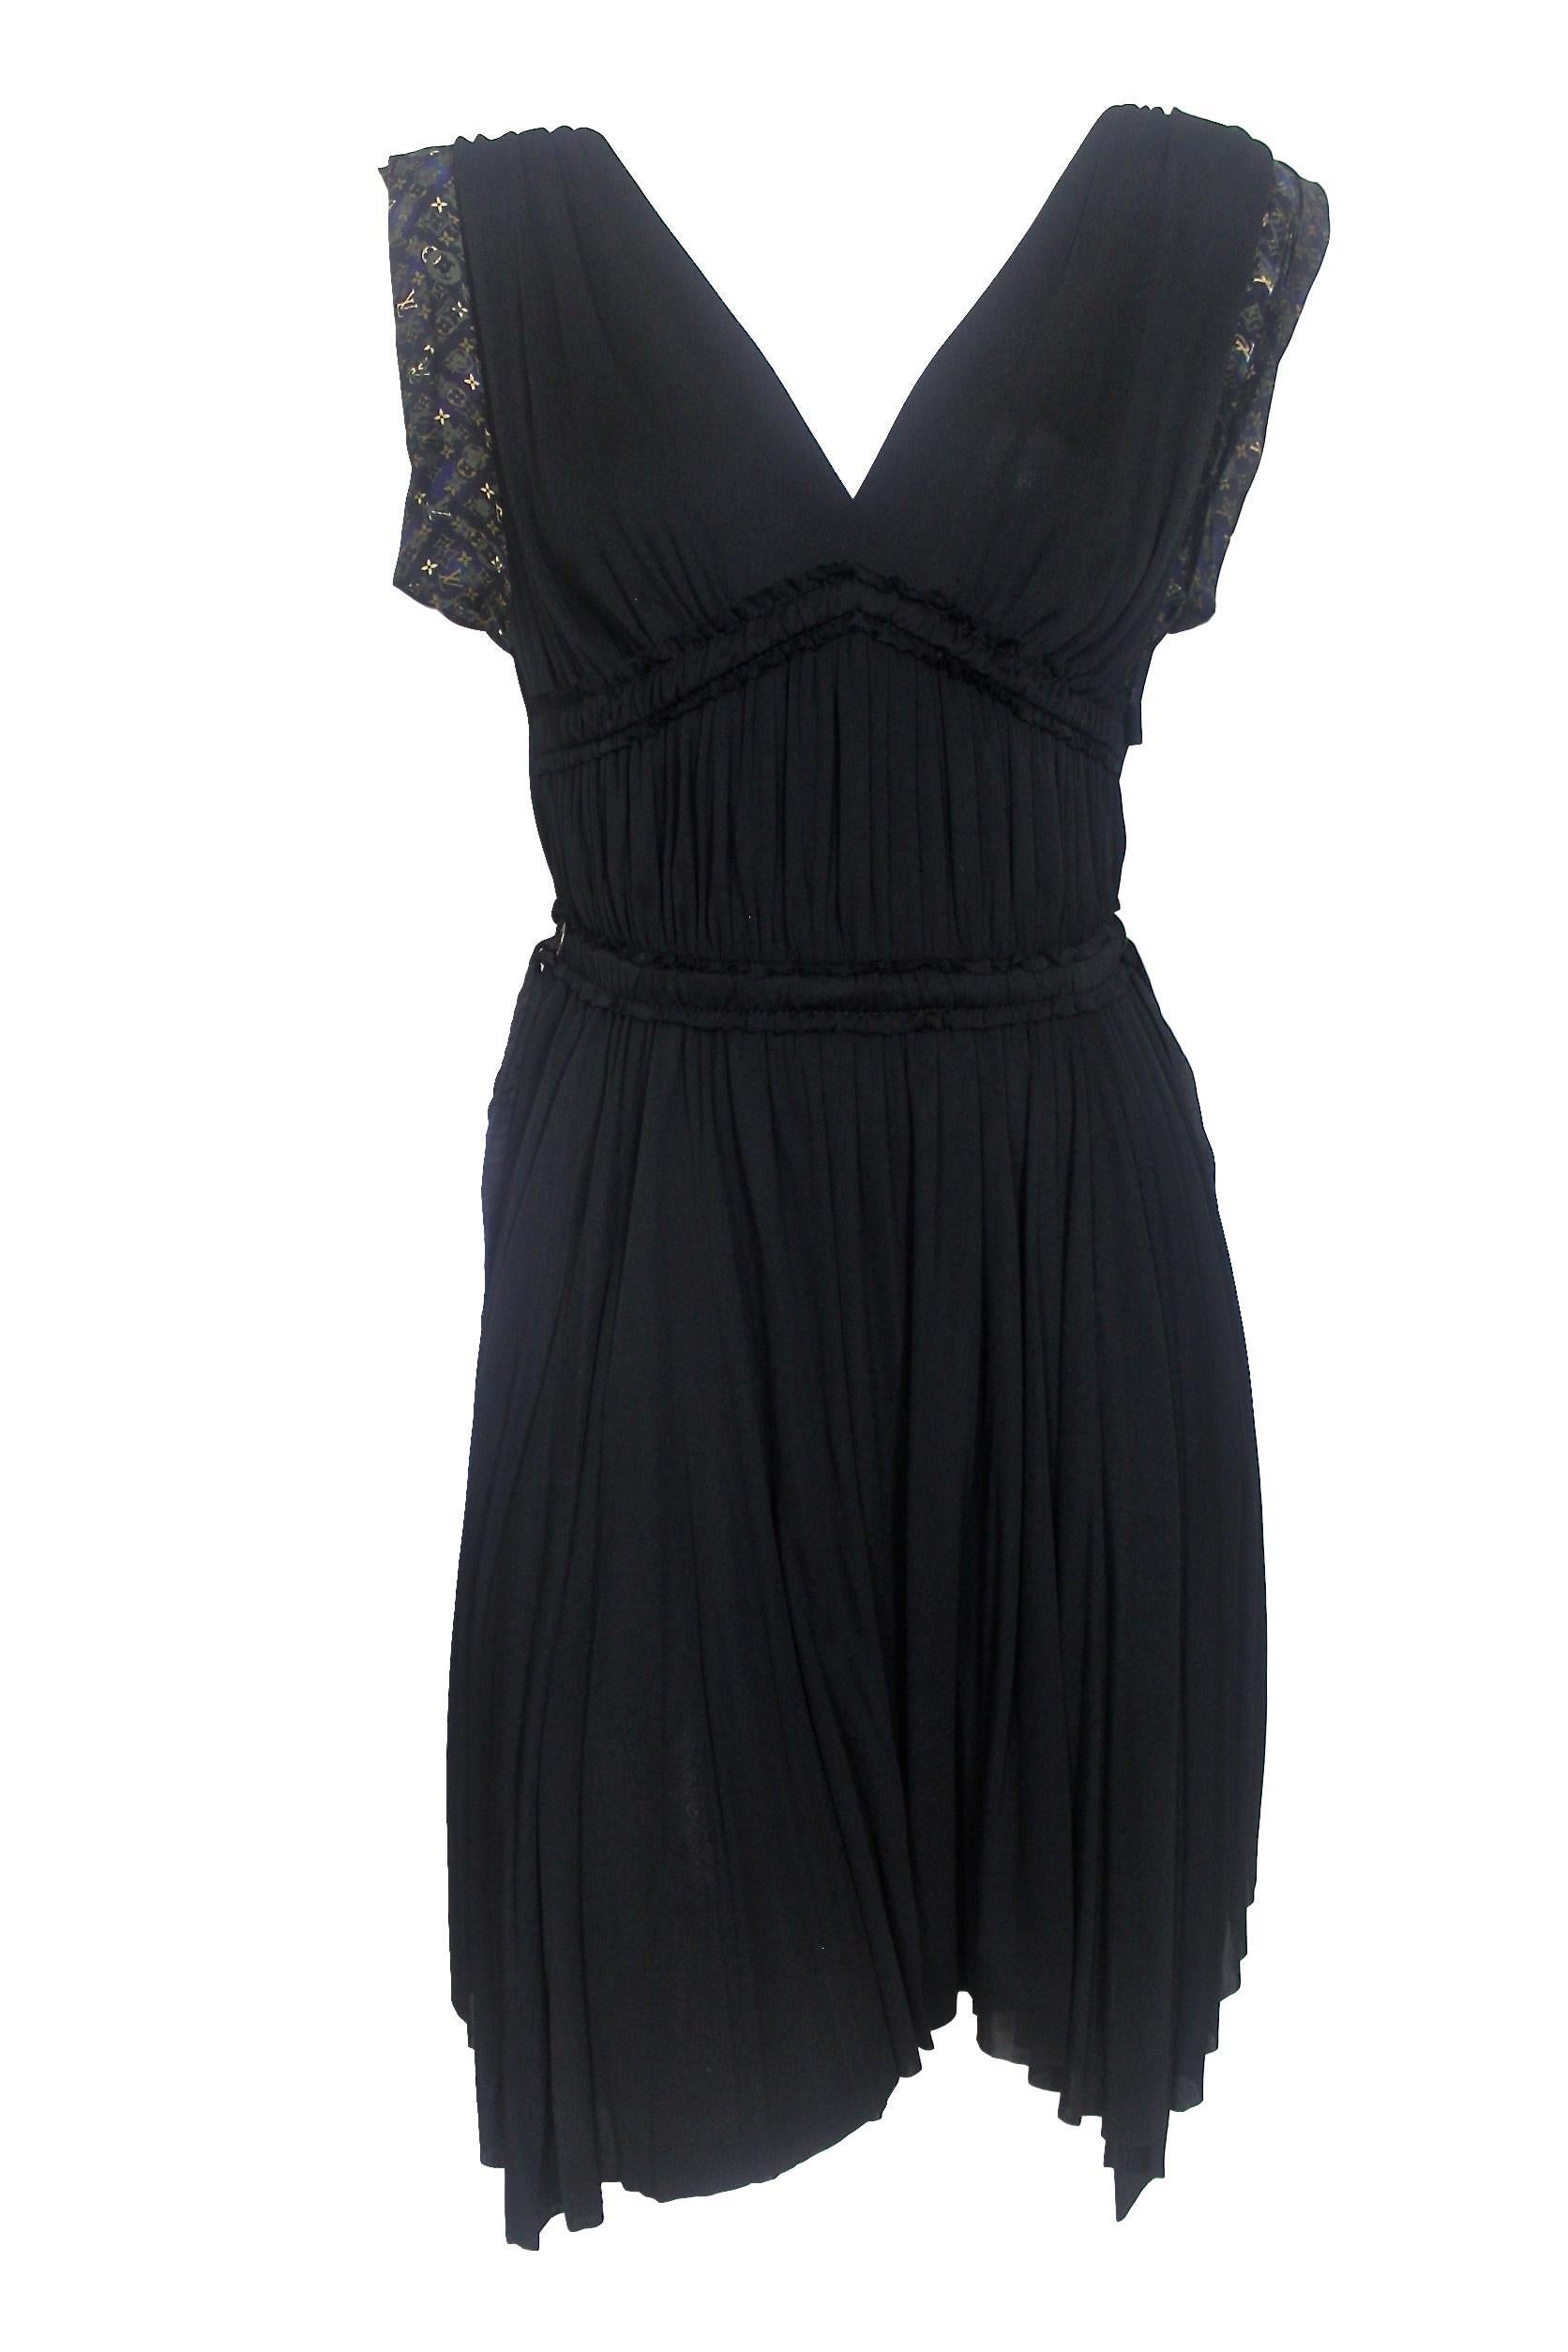 Louis Vuitton Grecian Style Dress For Sale 6